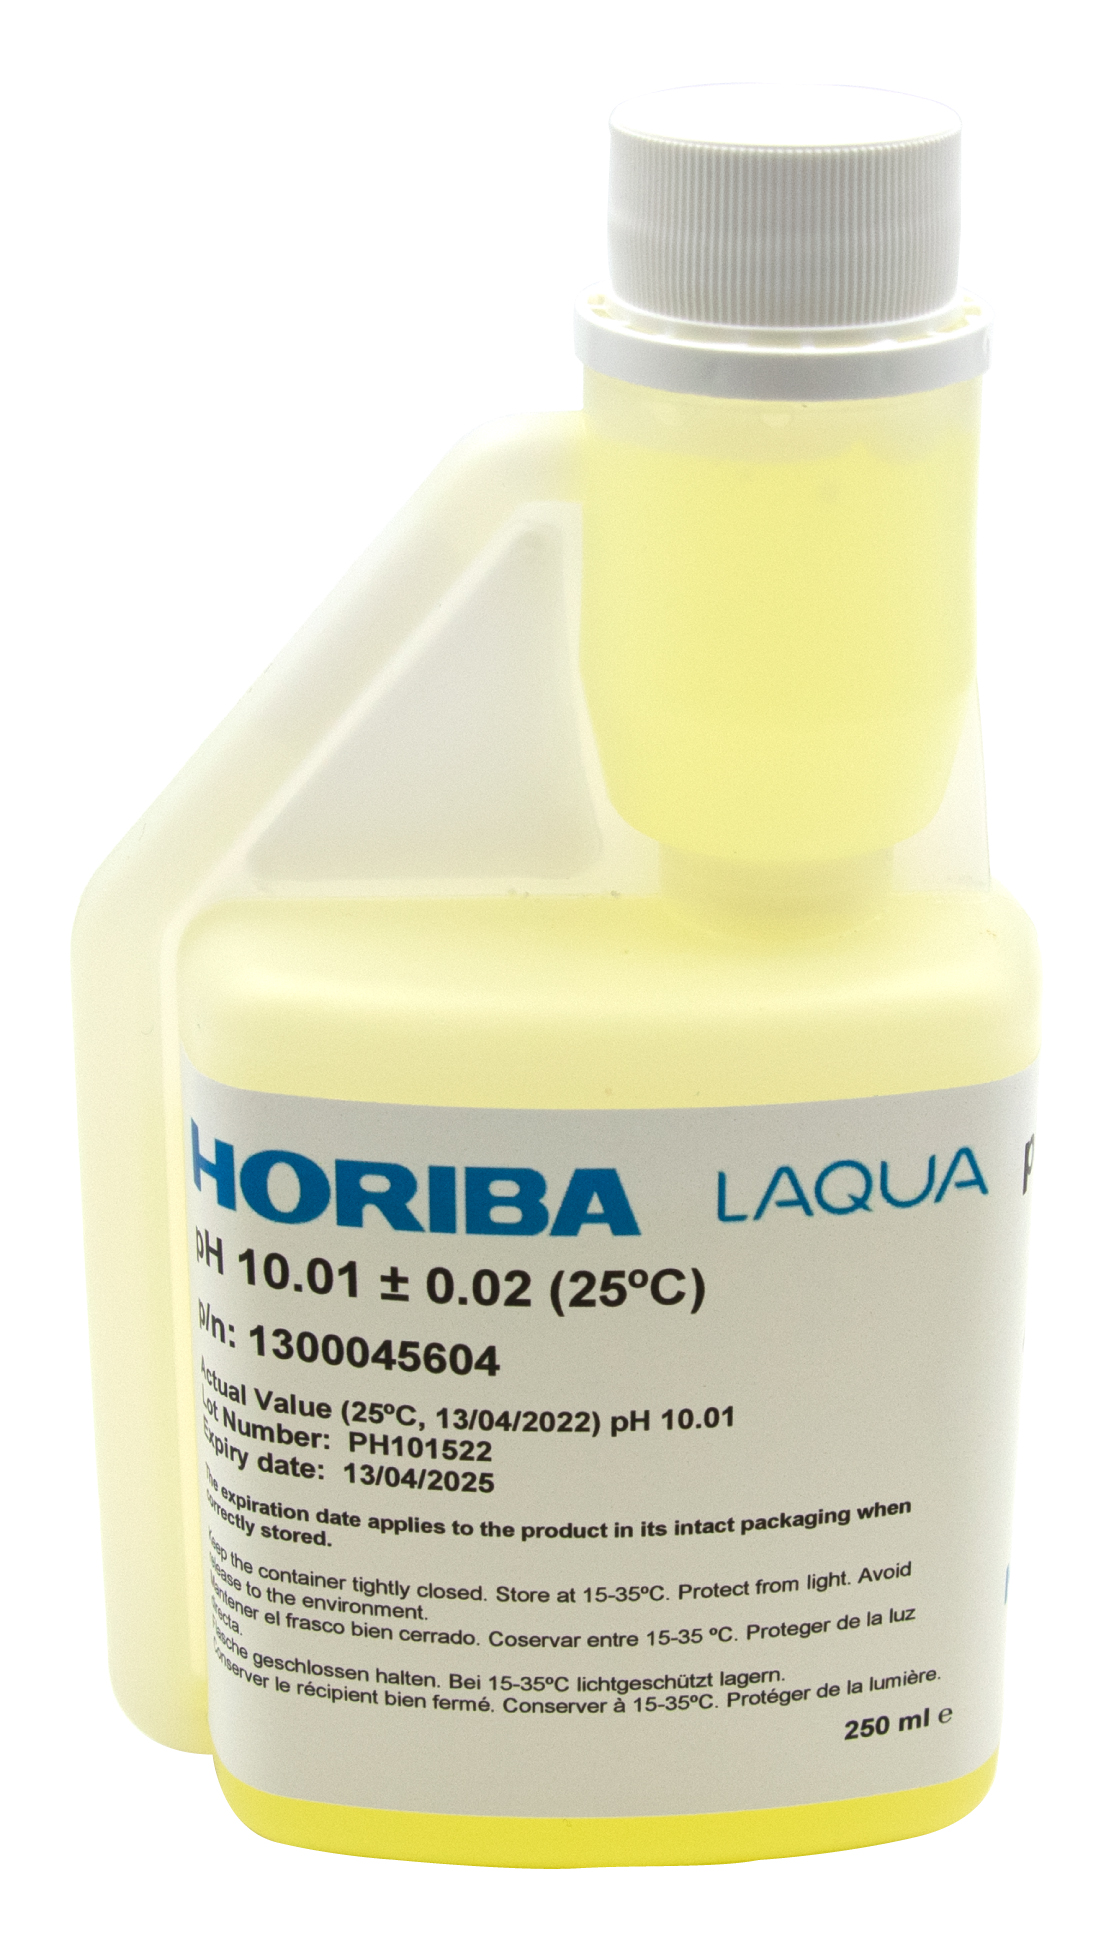 HORIBA pH 10.01 (±0.02pH @25°C) buffer solution 250ml (250-PH-10)